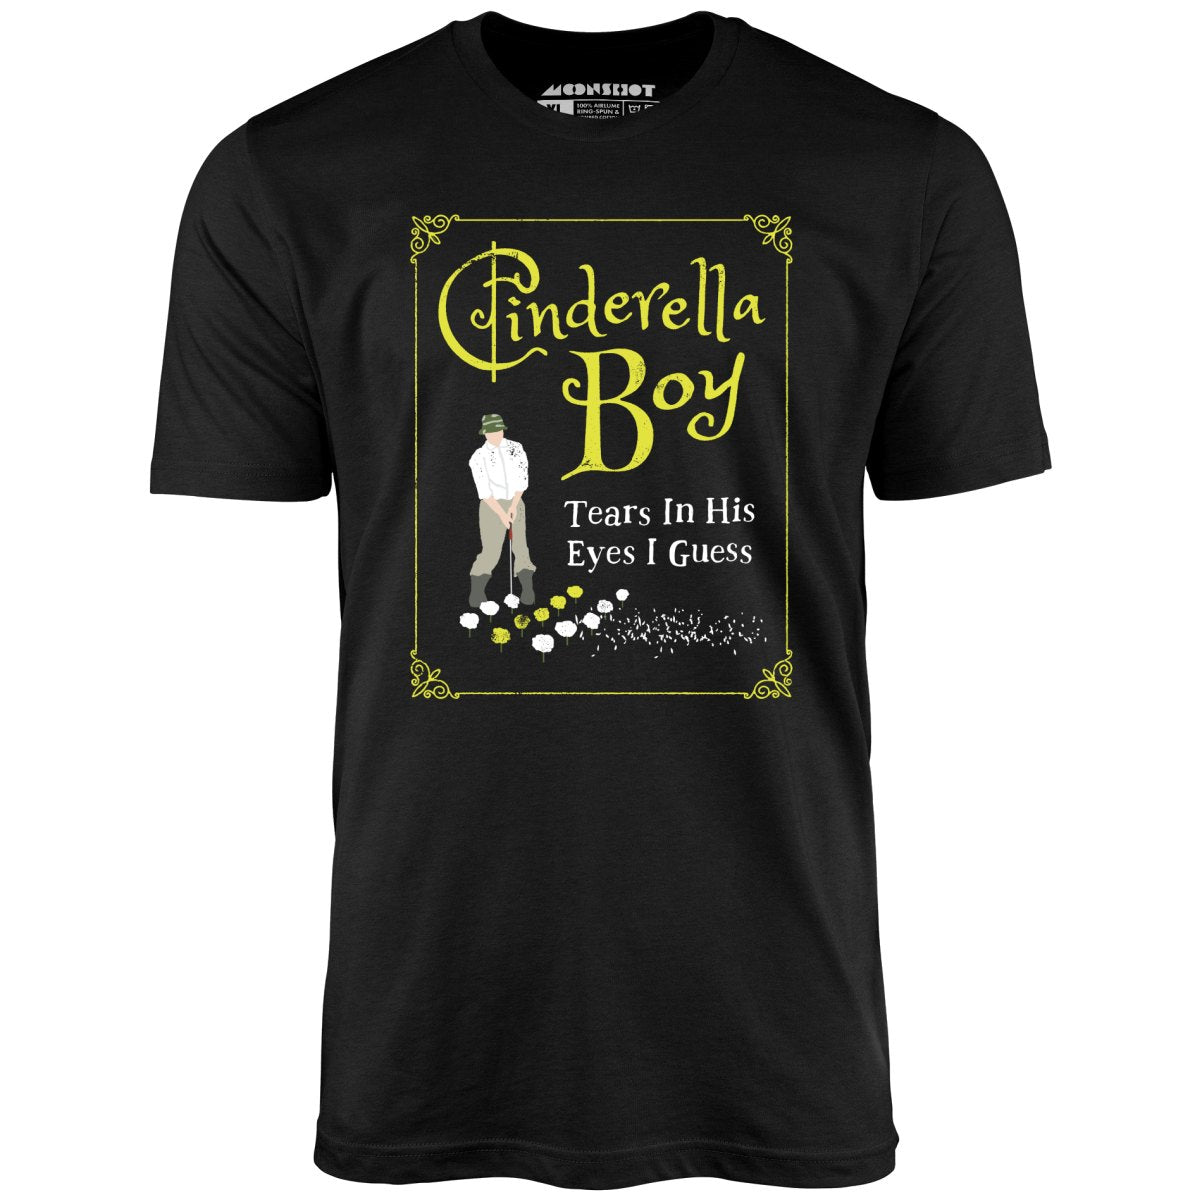 Cinderella Boy - Tears in His Eyes I Guess - Unisex T-Shirt